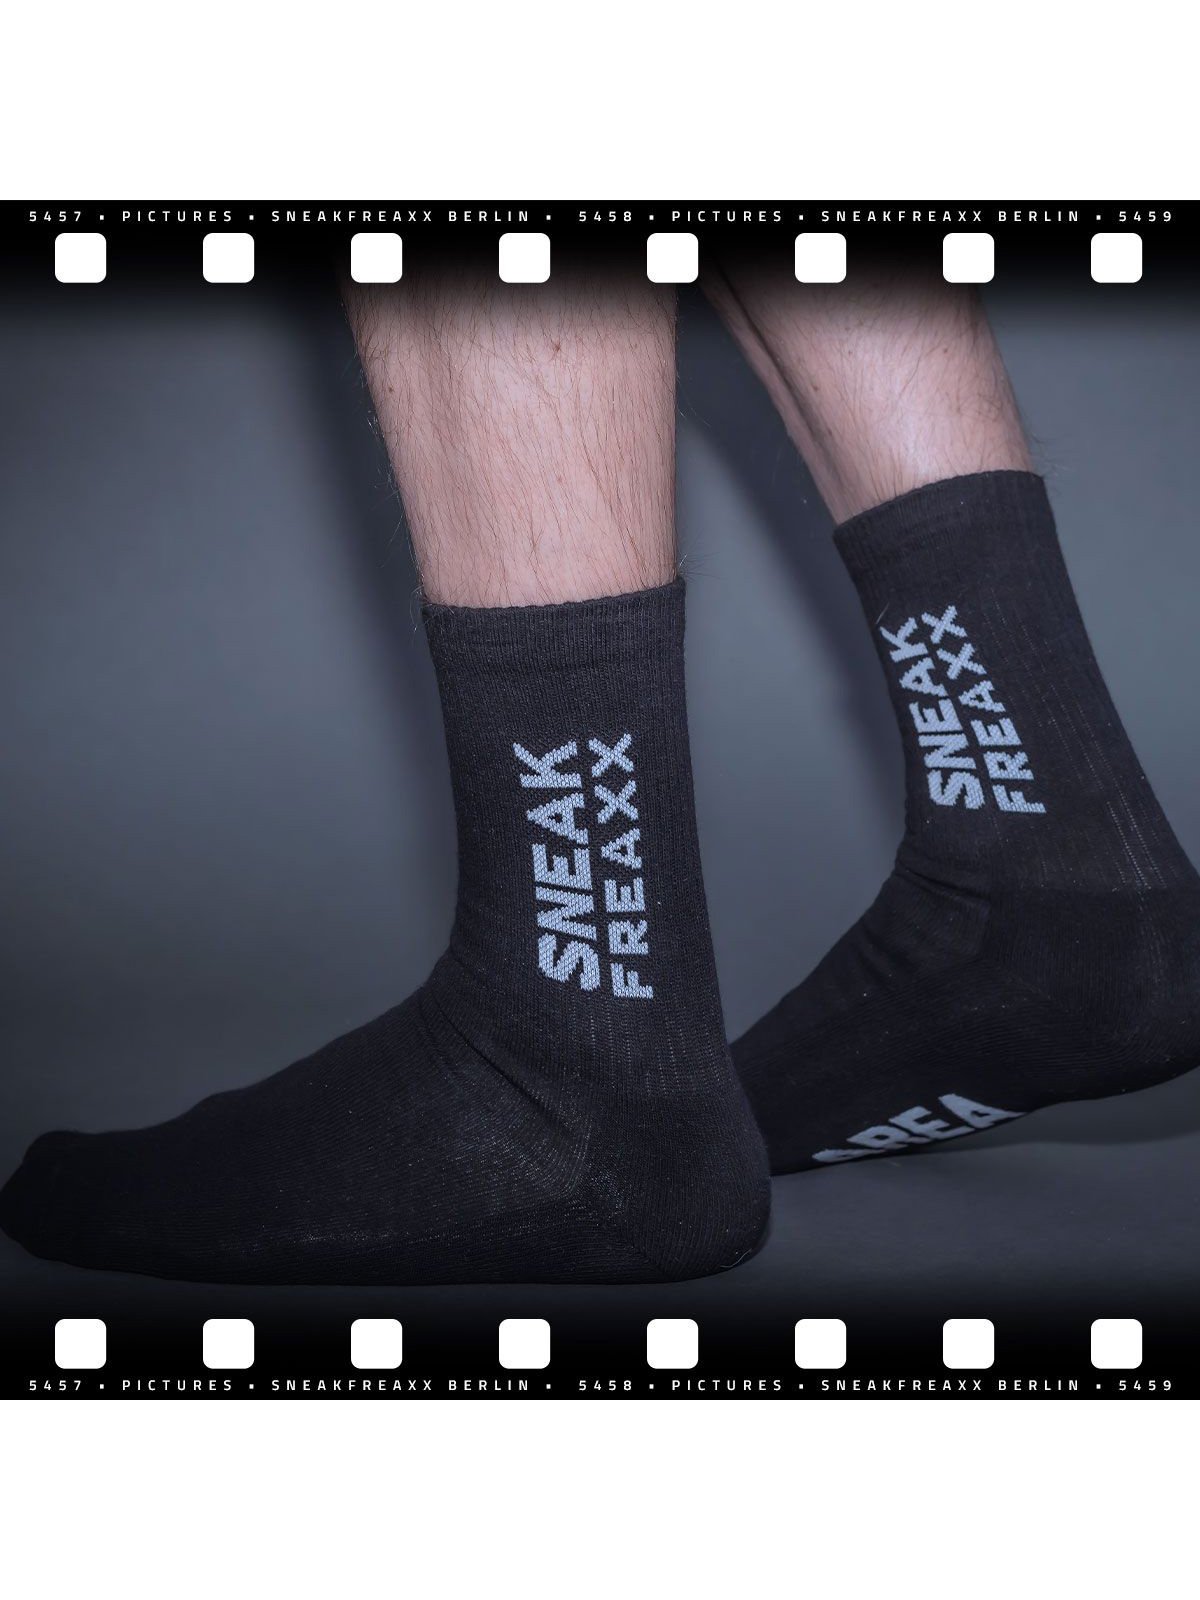 Smelly Area Socks